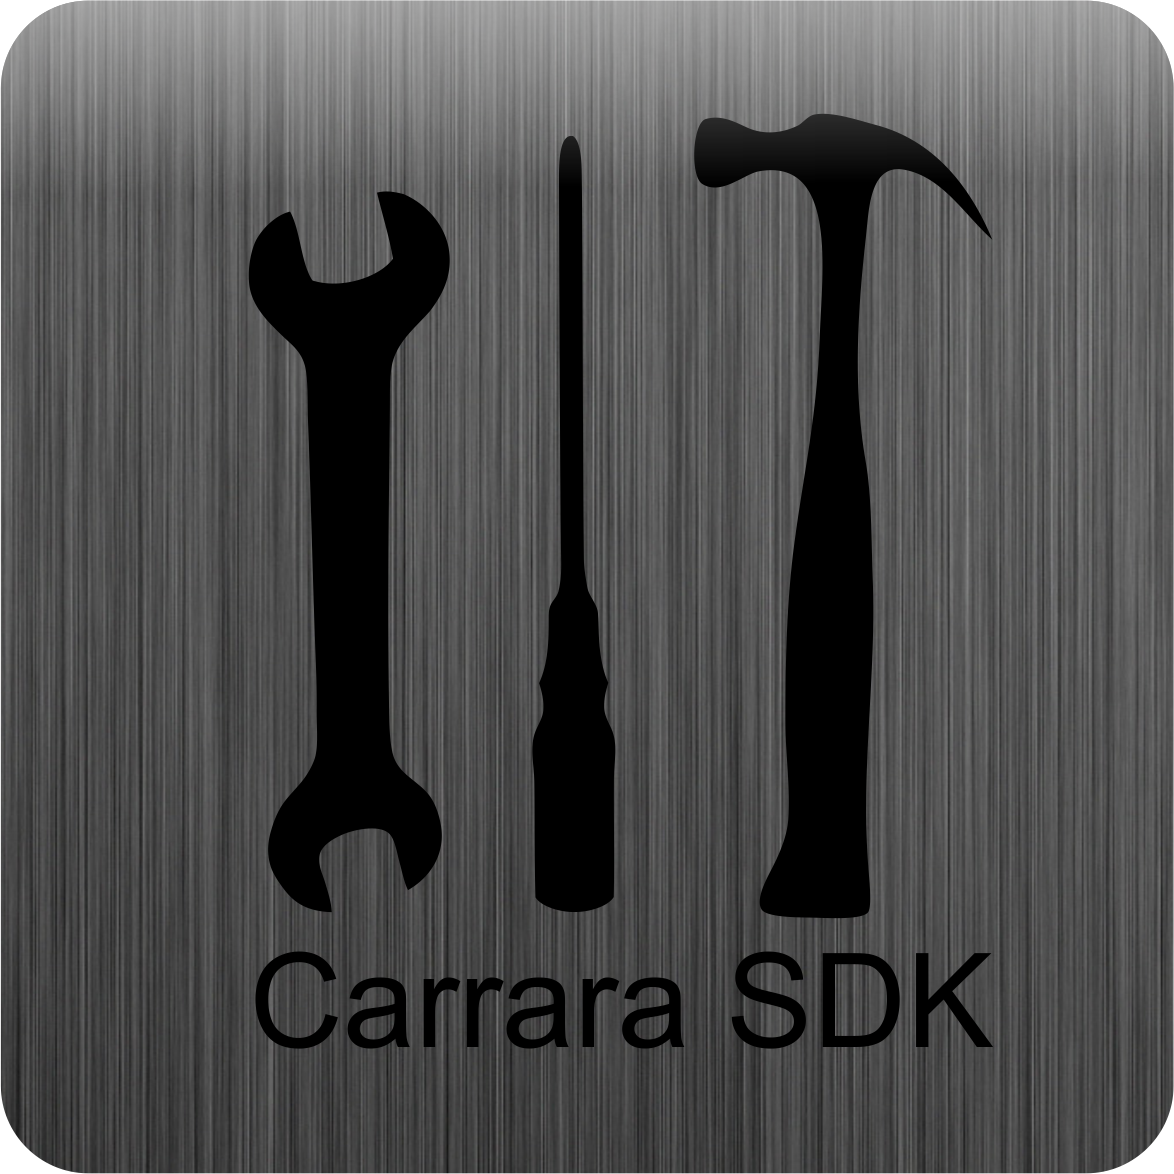 Carrara 8 SDK can be found here!